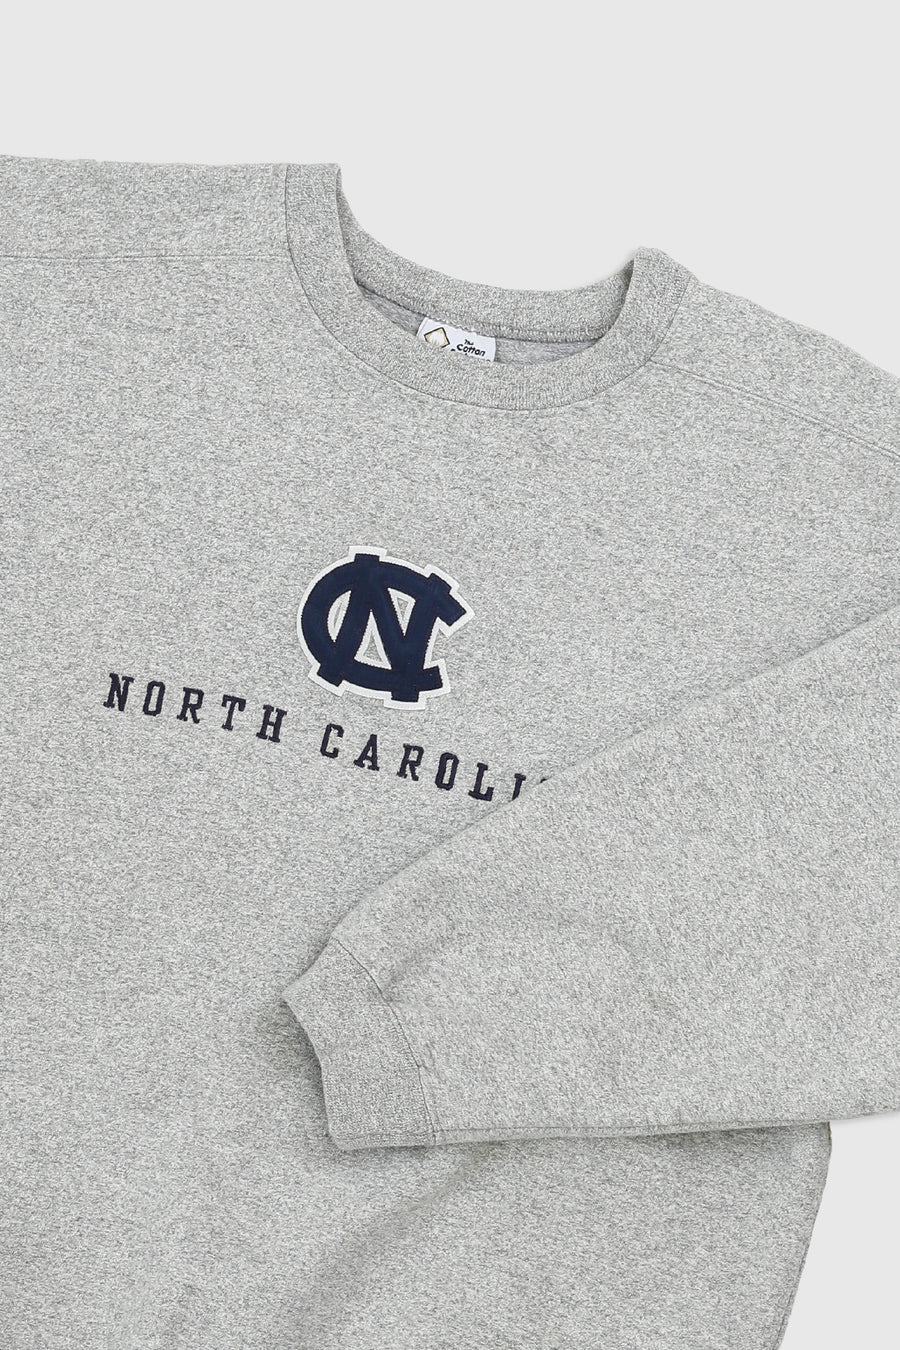 Vintage North Carolina Sweatshirt